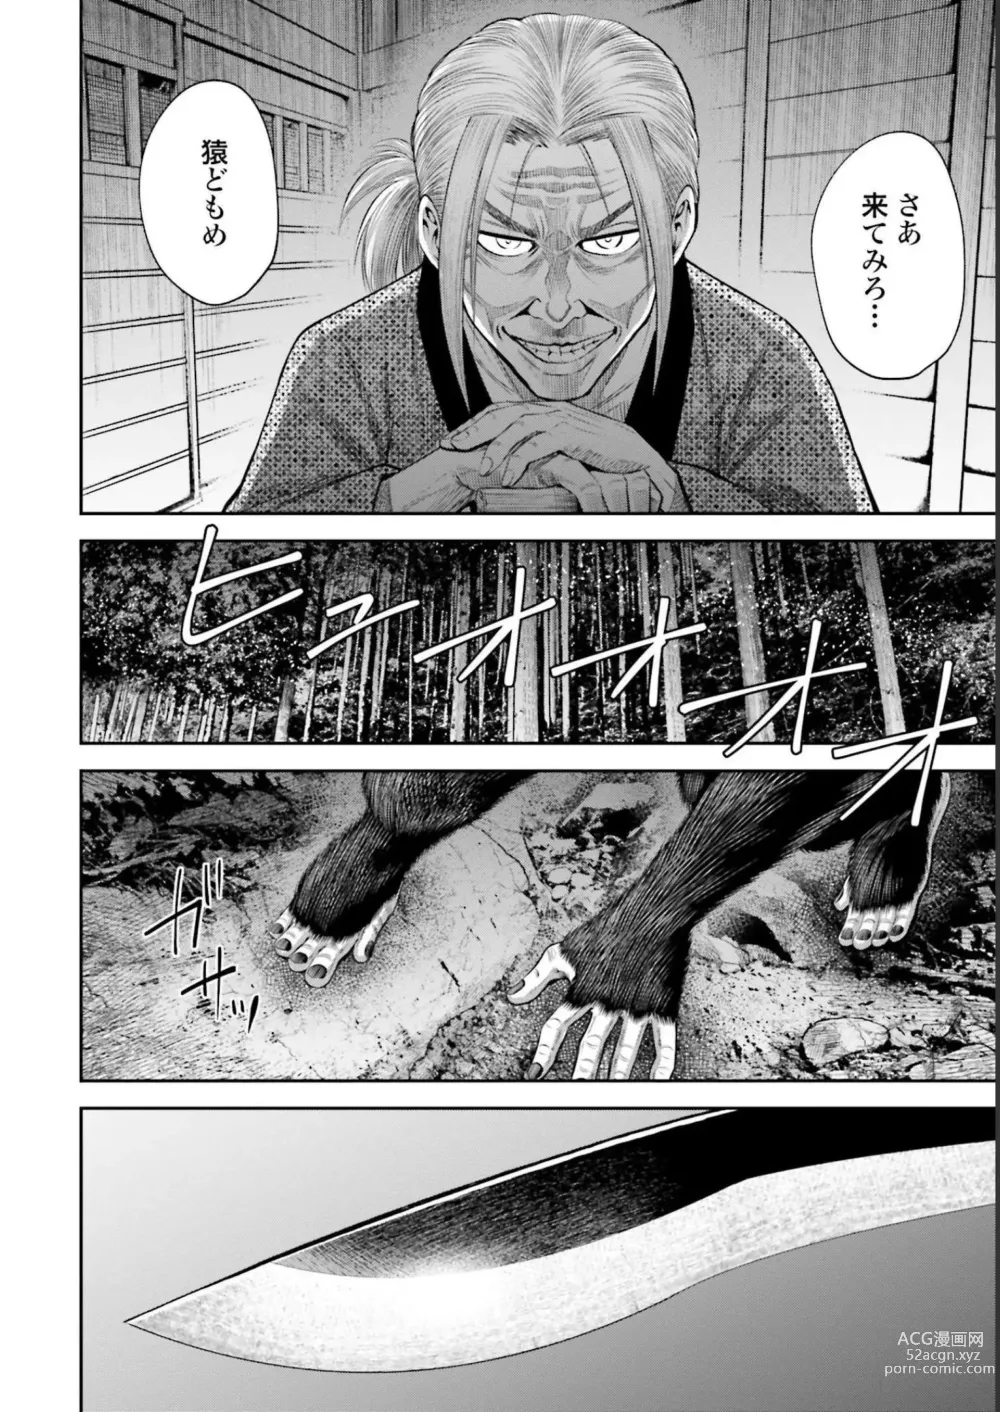 Page 156 of manga Sarumane Vol. 3